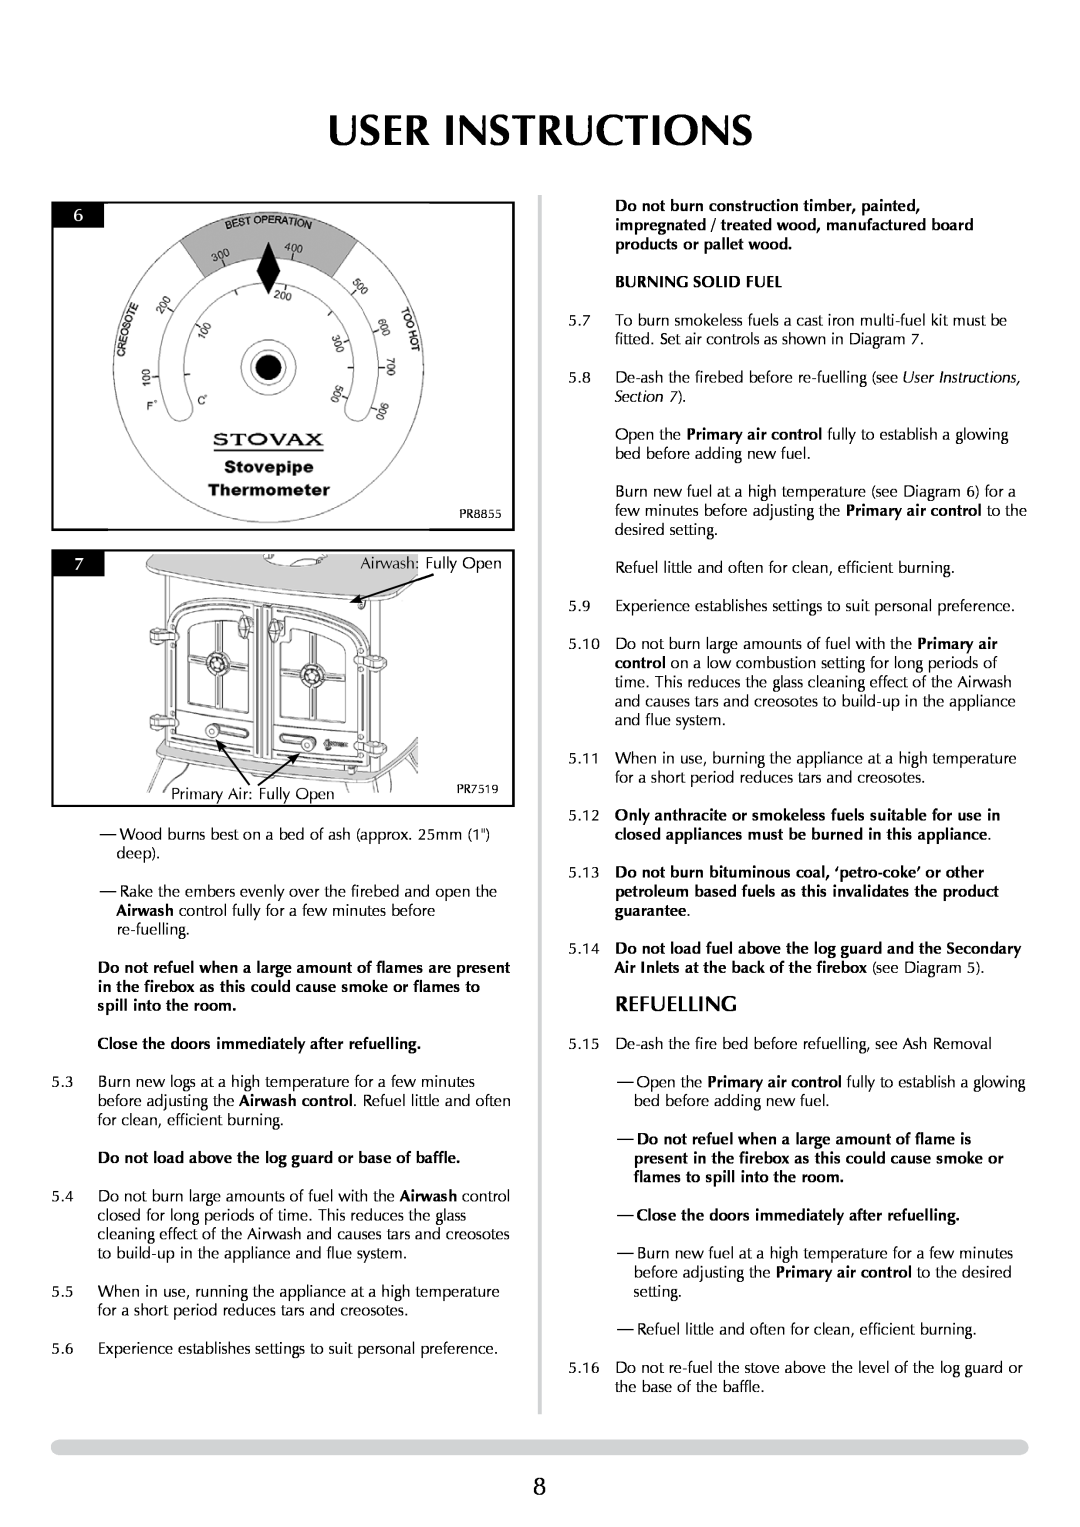 Yeoman DEVON 50 manual Refuelling, User Instructions 